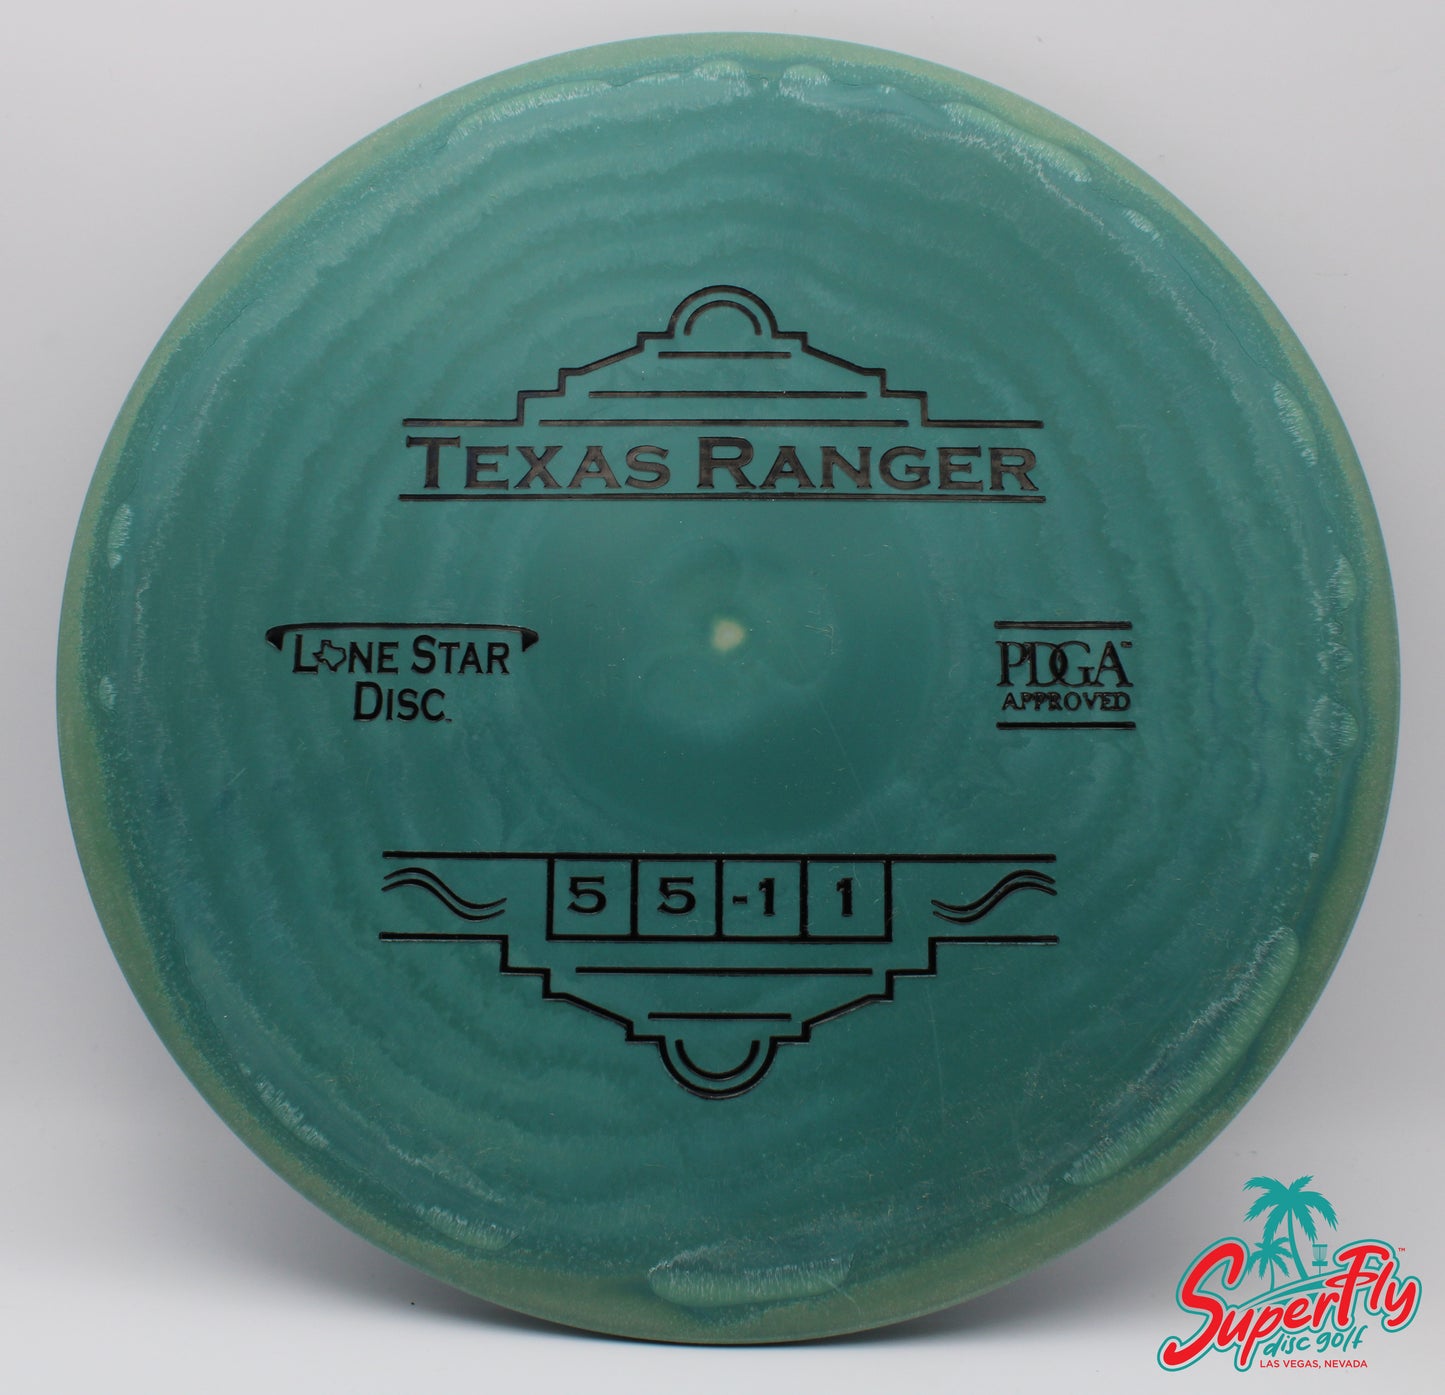 Lone Star Disc Delta 1 Texas Ranger